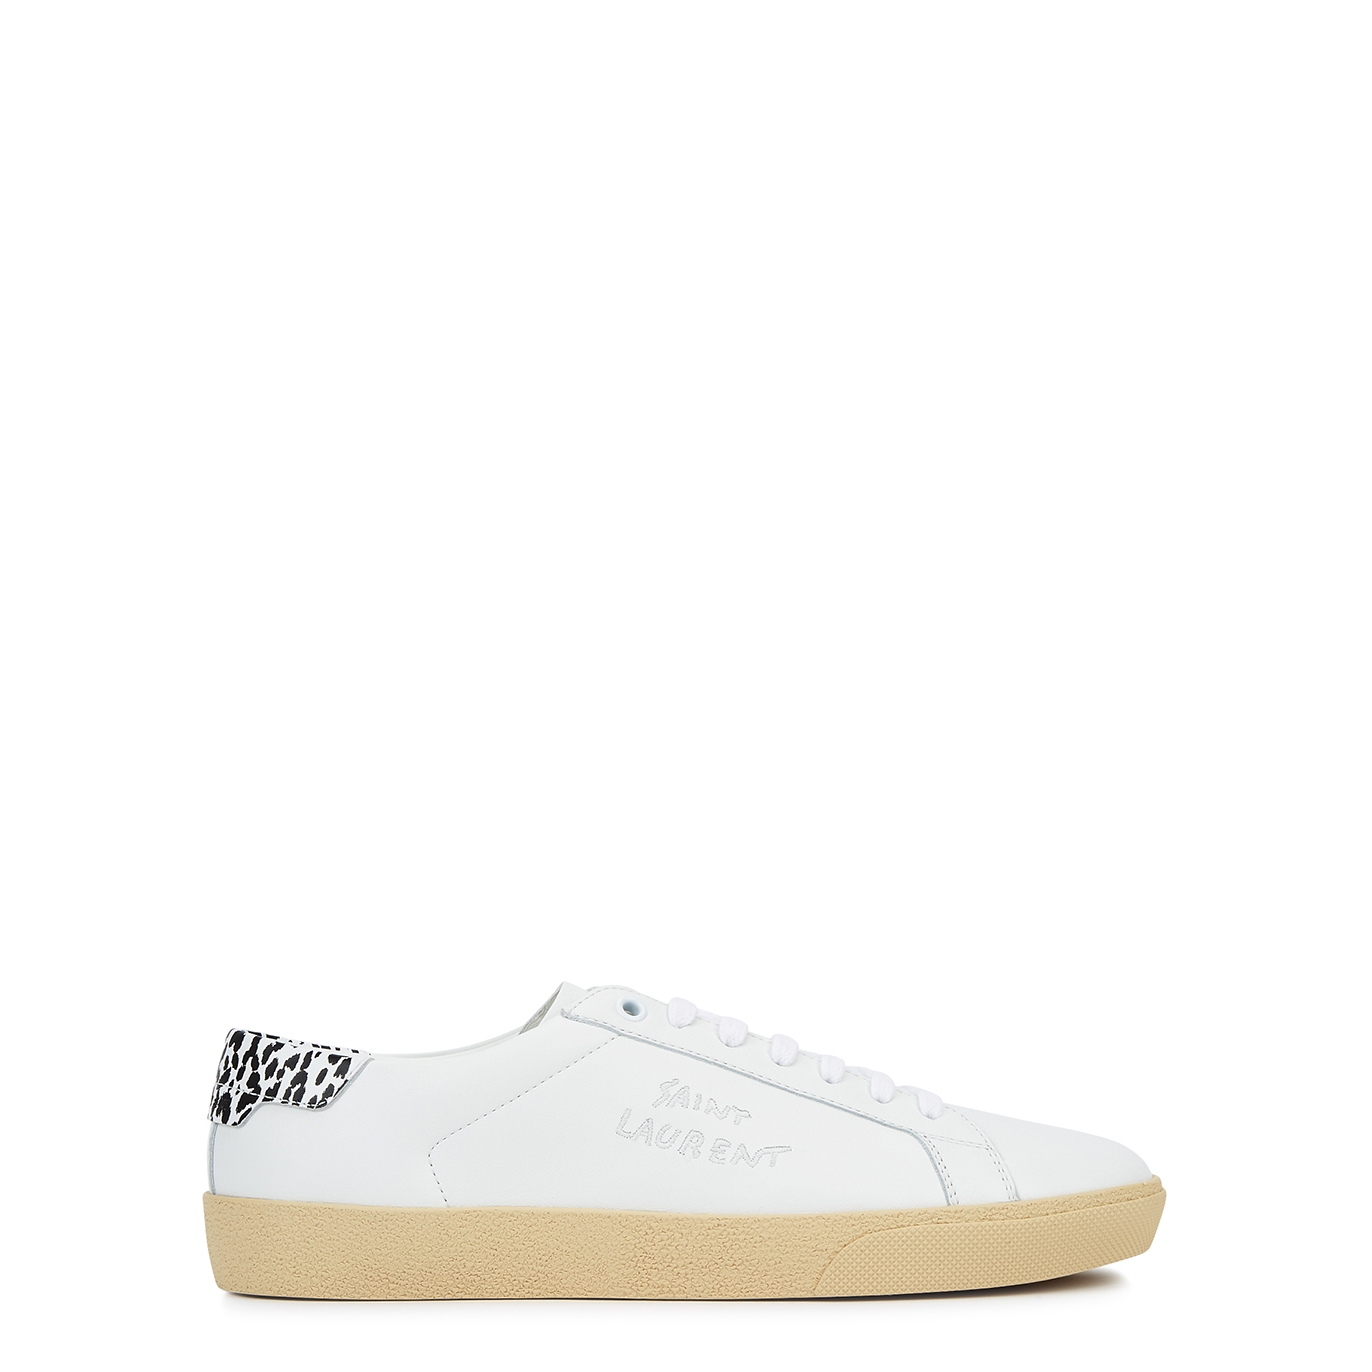 Saint Laurent SL/06 White Leather Sneakers - 5.5